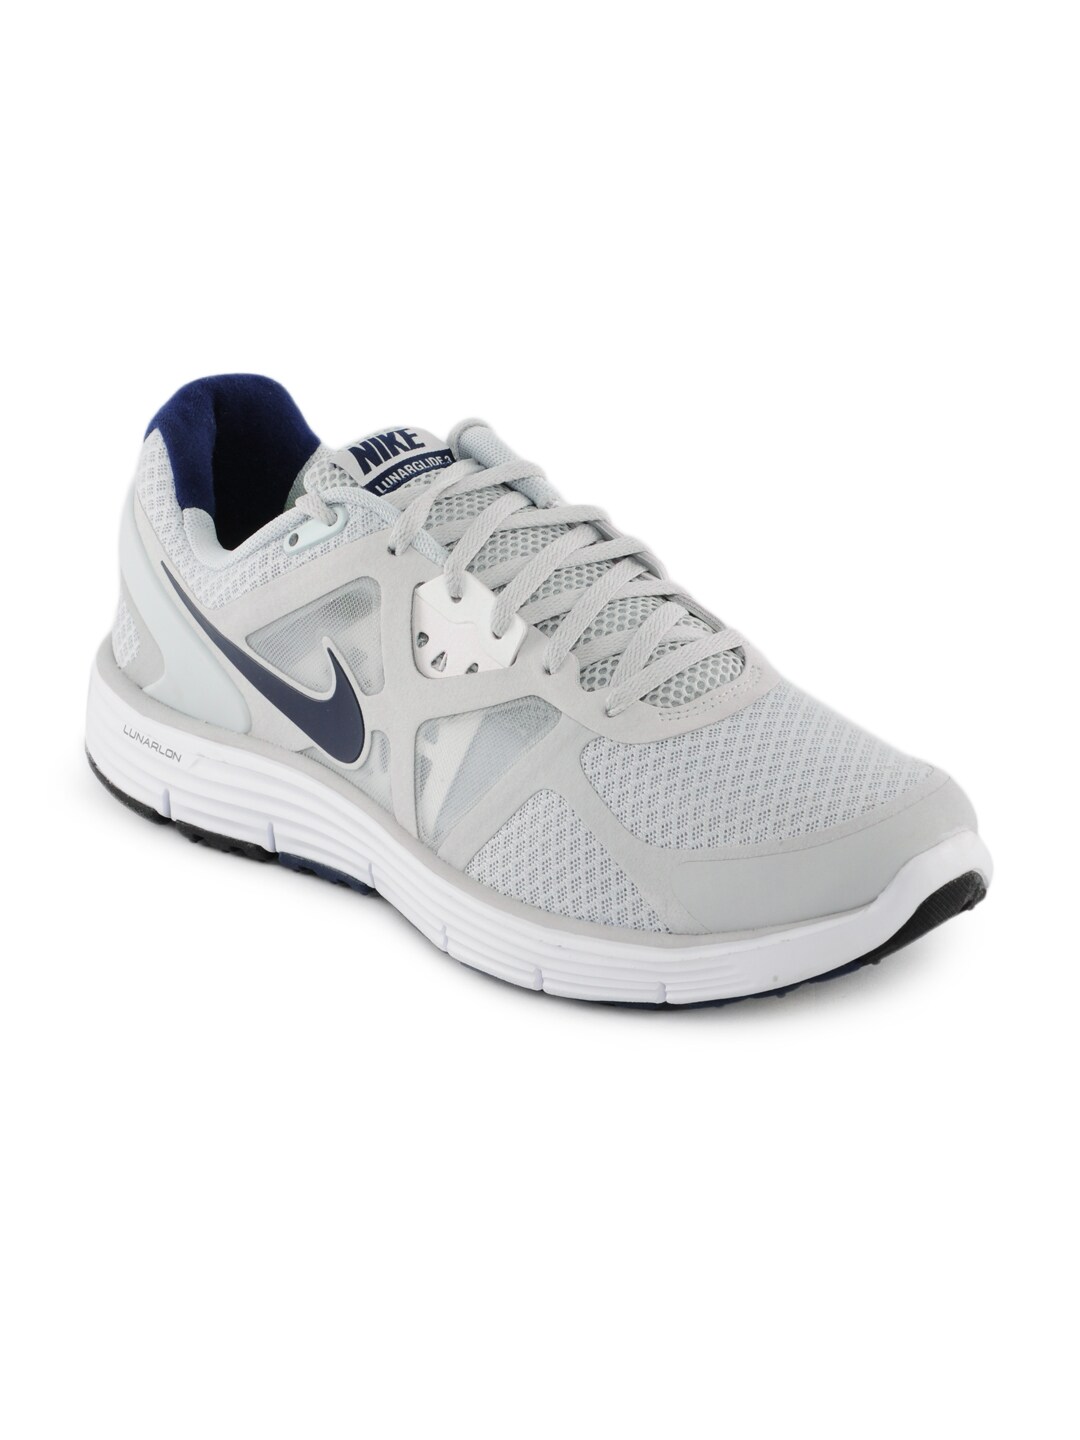 Nike Men Lunarglide+ 3 Grey Sports Shoes